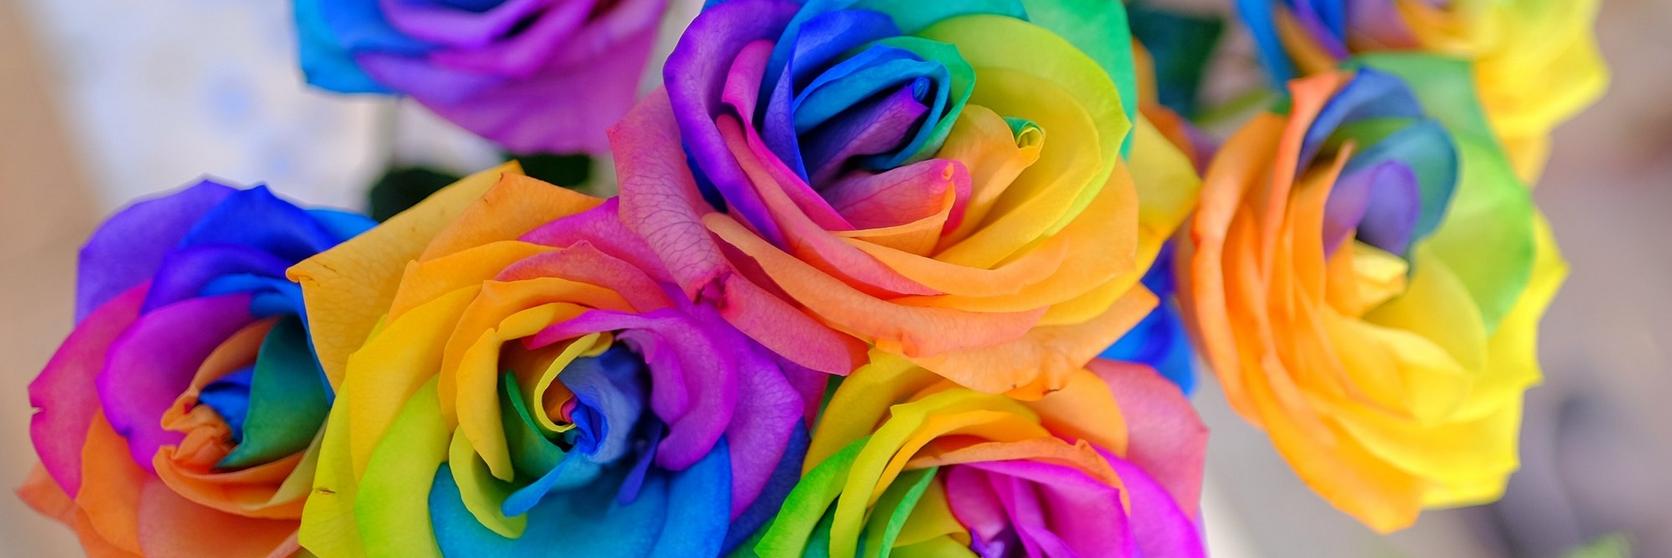 ff_rainbow_rose_bouquet